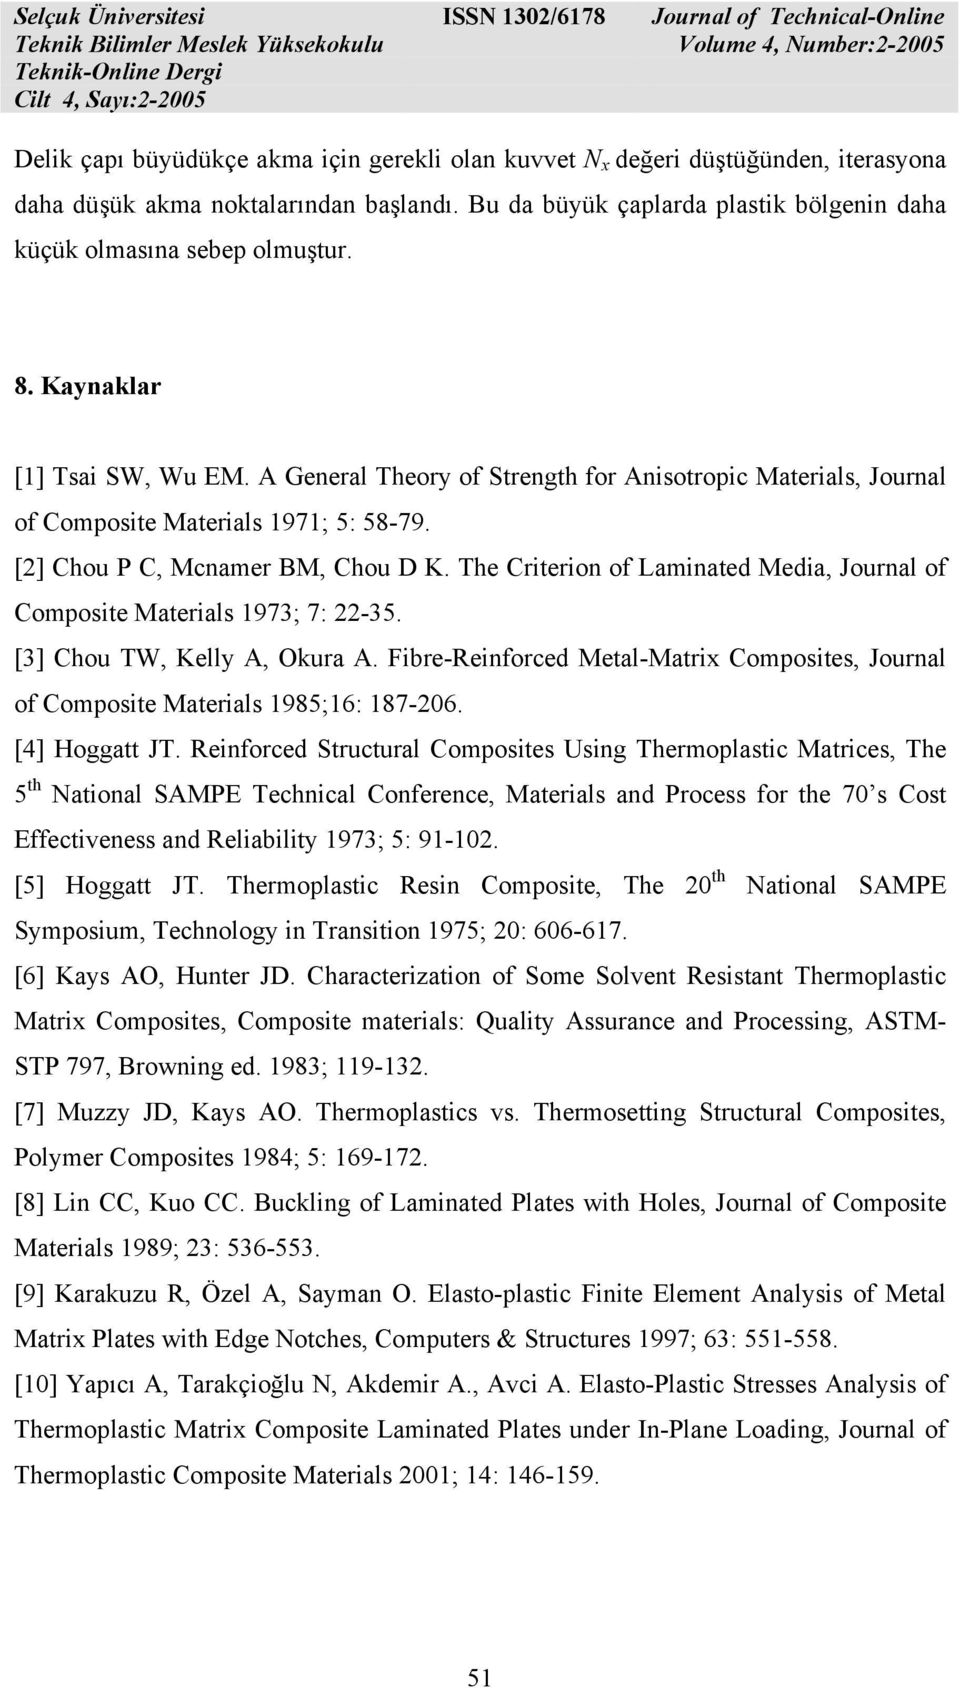 General Teor of Strengt for nisotropic Materials, Journal of Composite Materials 1971; 5: 58-79. [] Cou P C, Mcnamer BM, Cou D K.